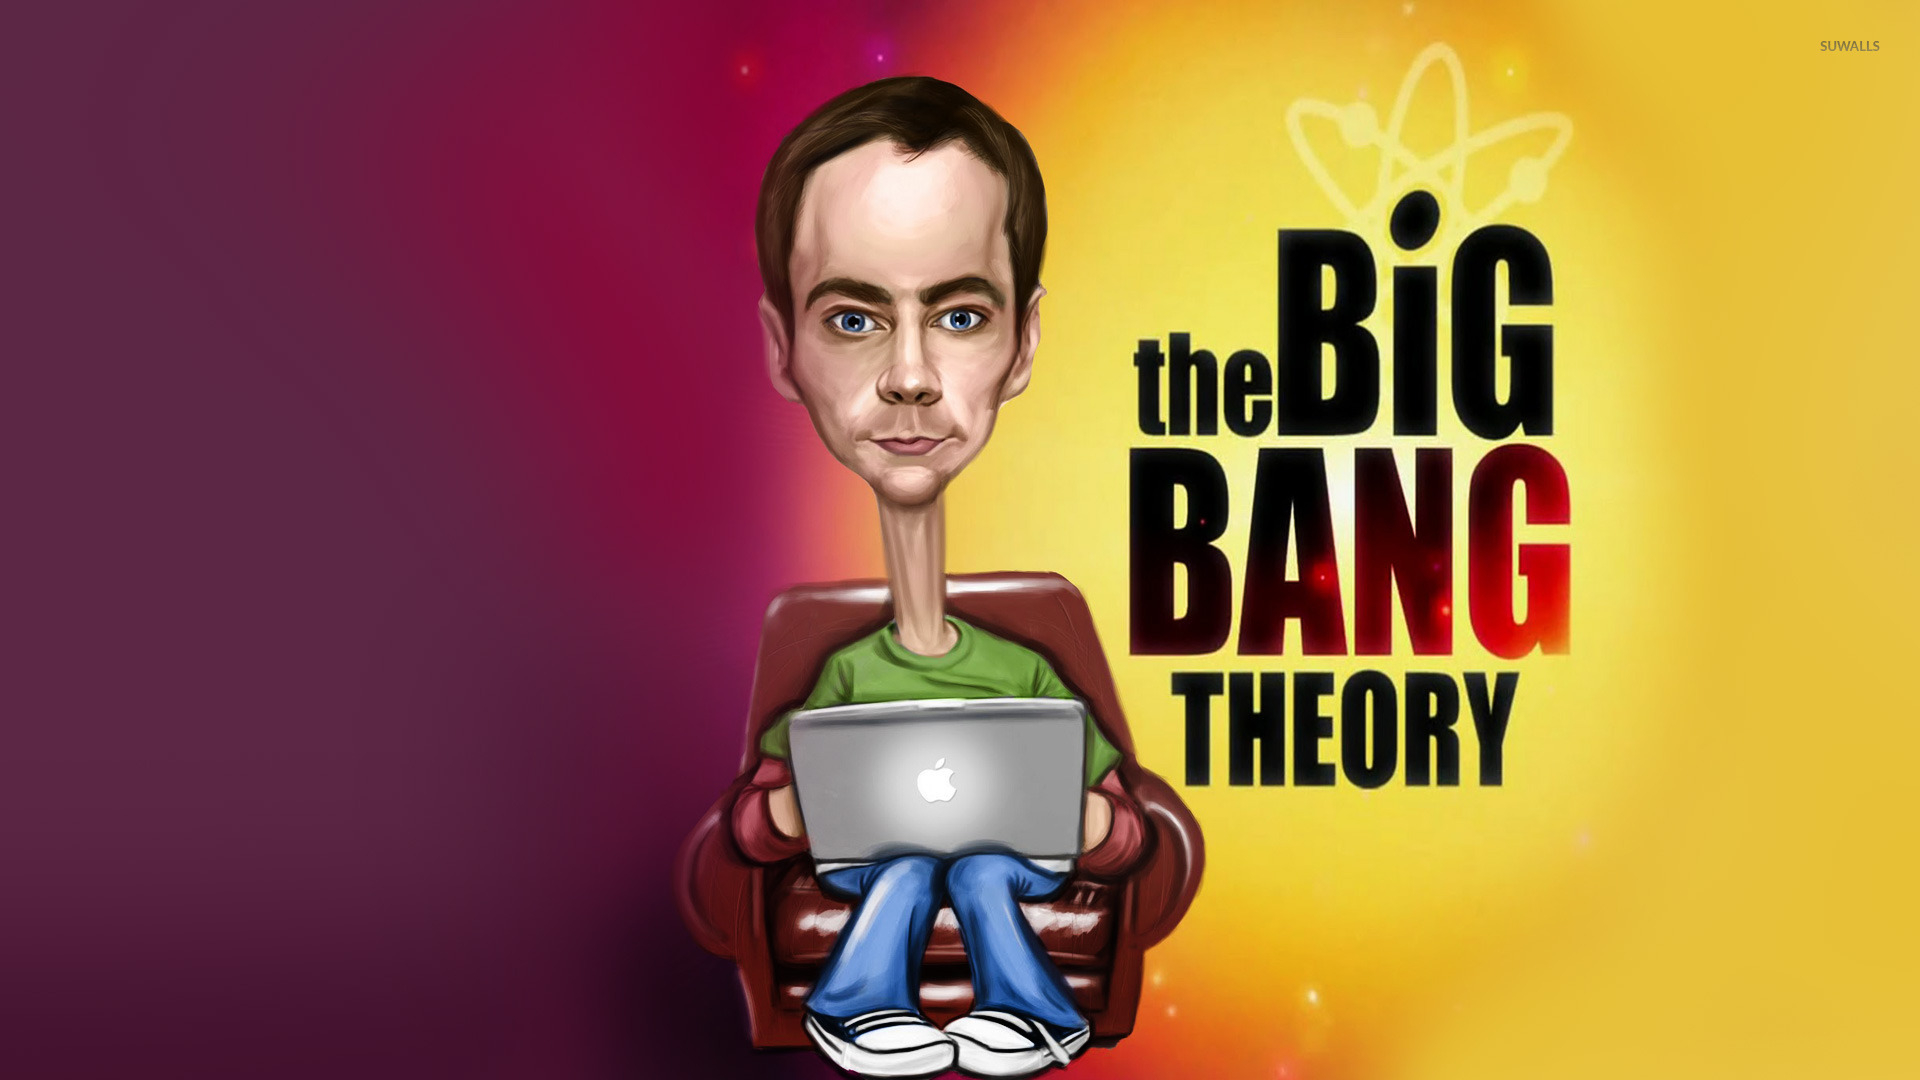 1920x1080 The Big Bang Theory Shannon1982 Wallpaper (41445344) Fanpop